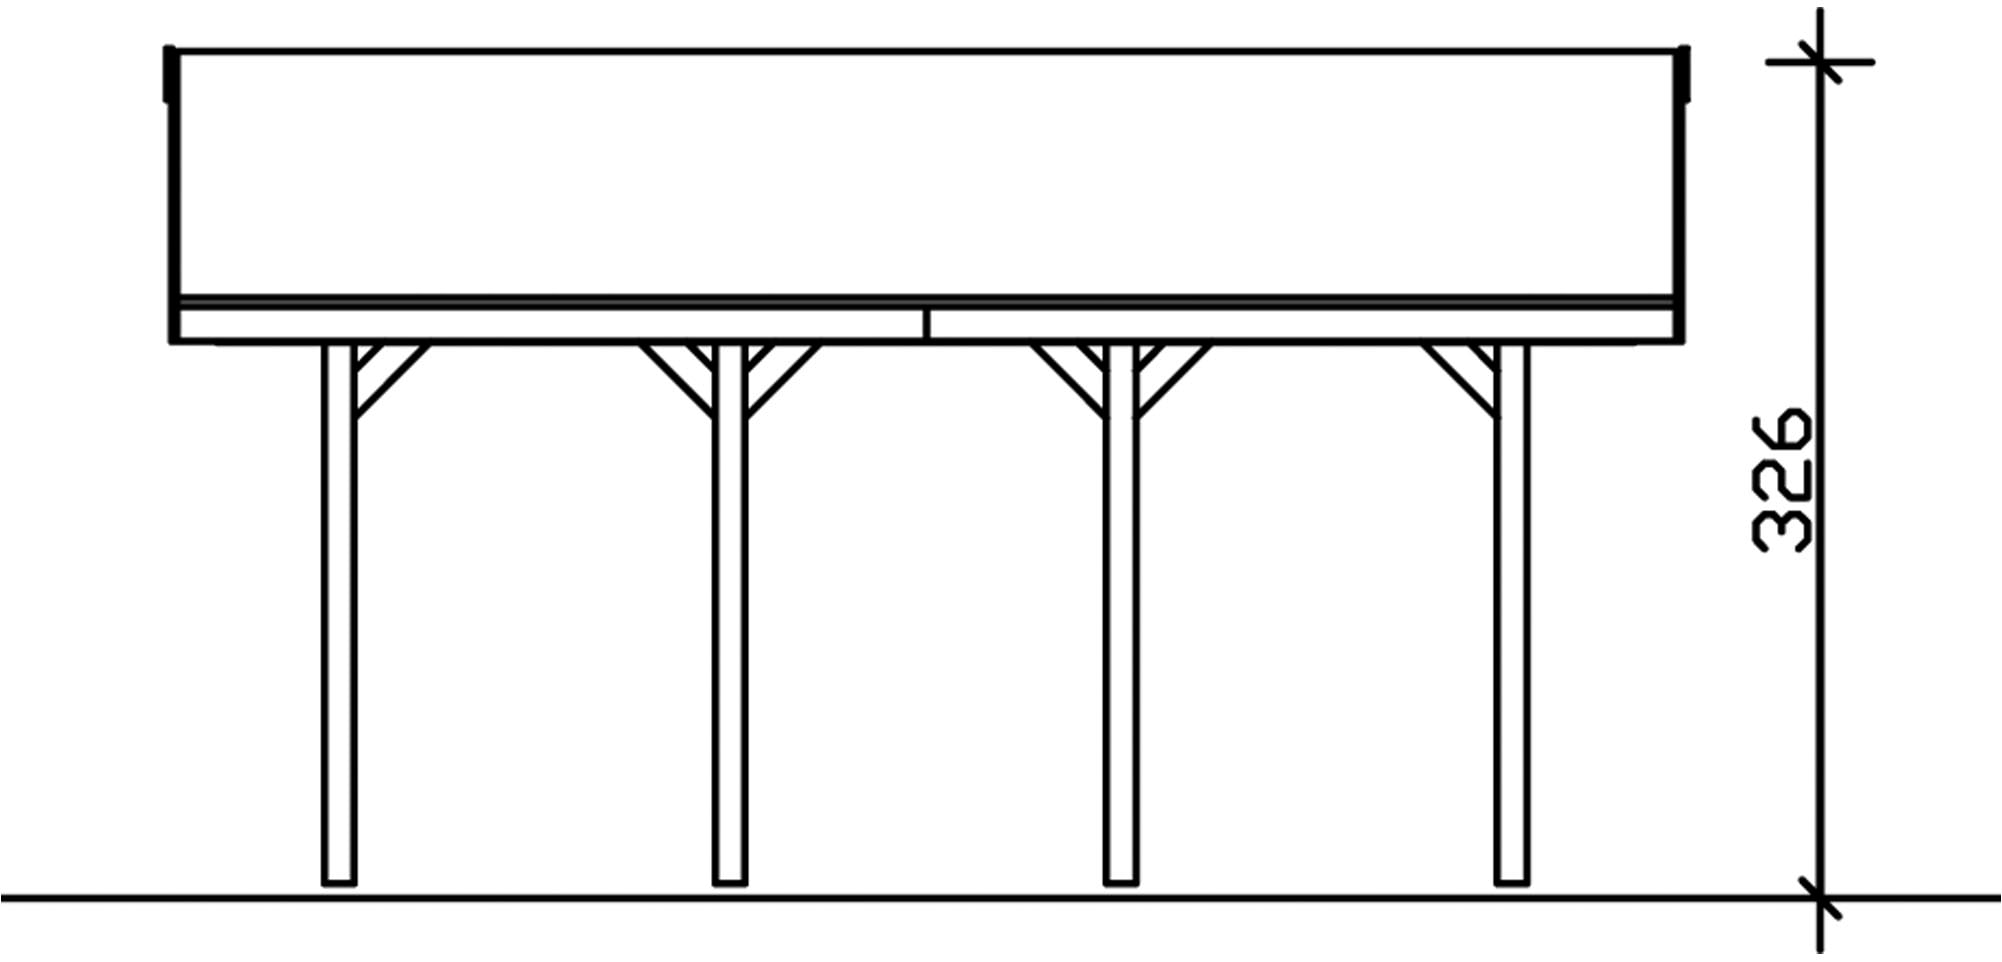 Skanholz Einzelcarport »Wallgau«, Nadelholz, 340 cm, Nussbaum, 430x600cm, mit Dachlattung